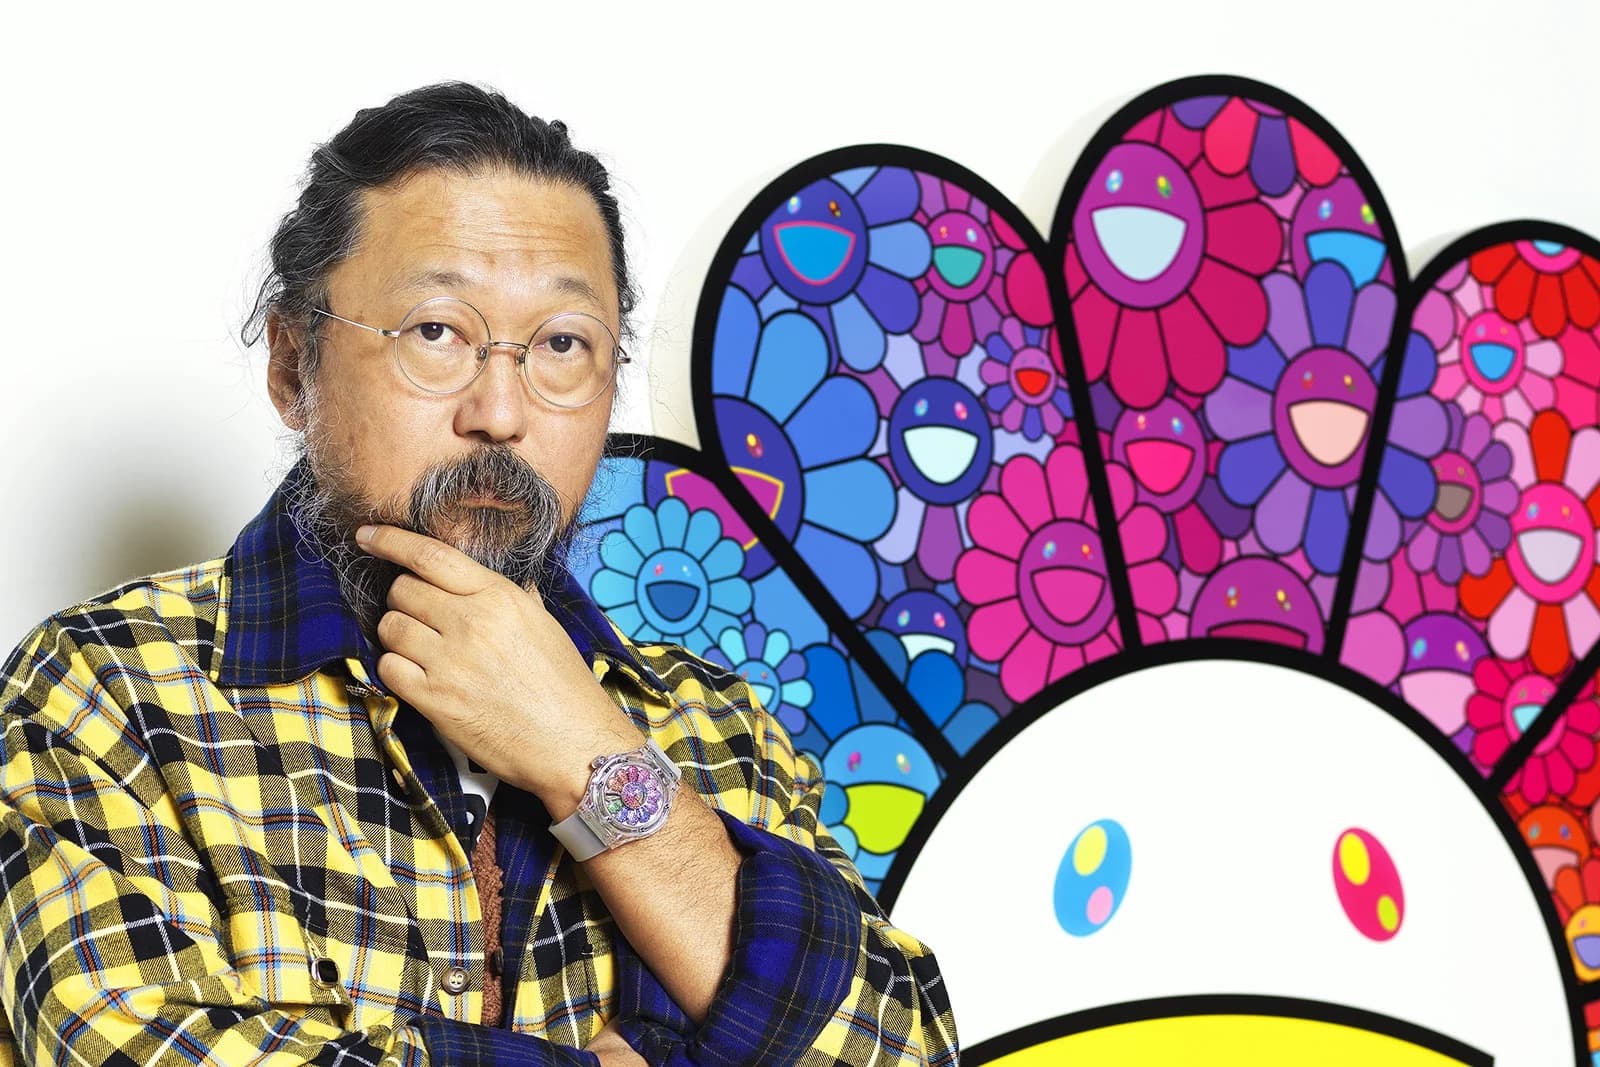 Hublot And Takashi Murakami Unveil New Watch Collaboration - The Impression